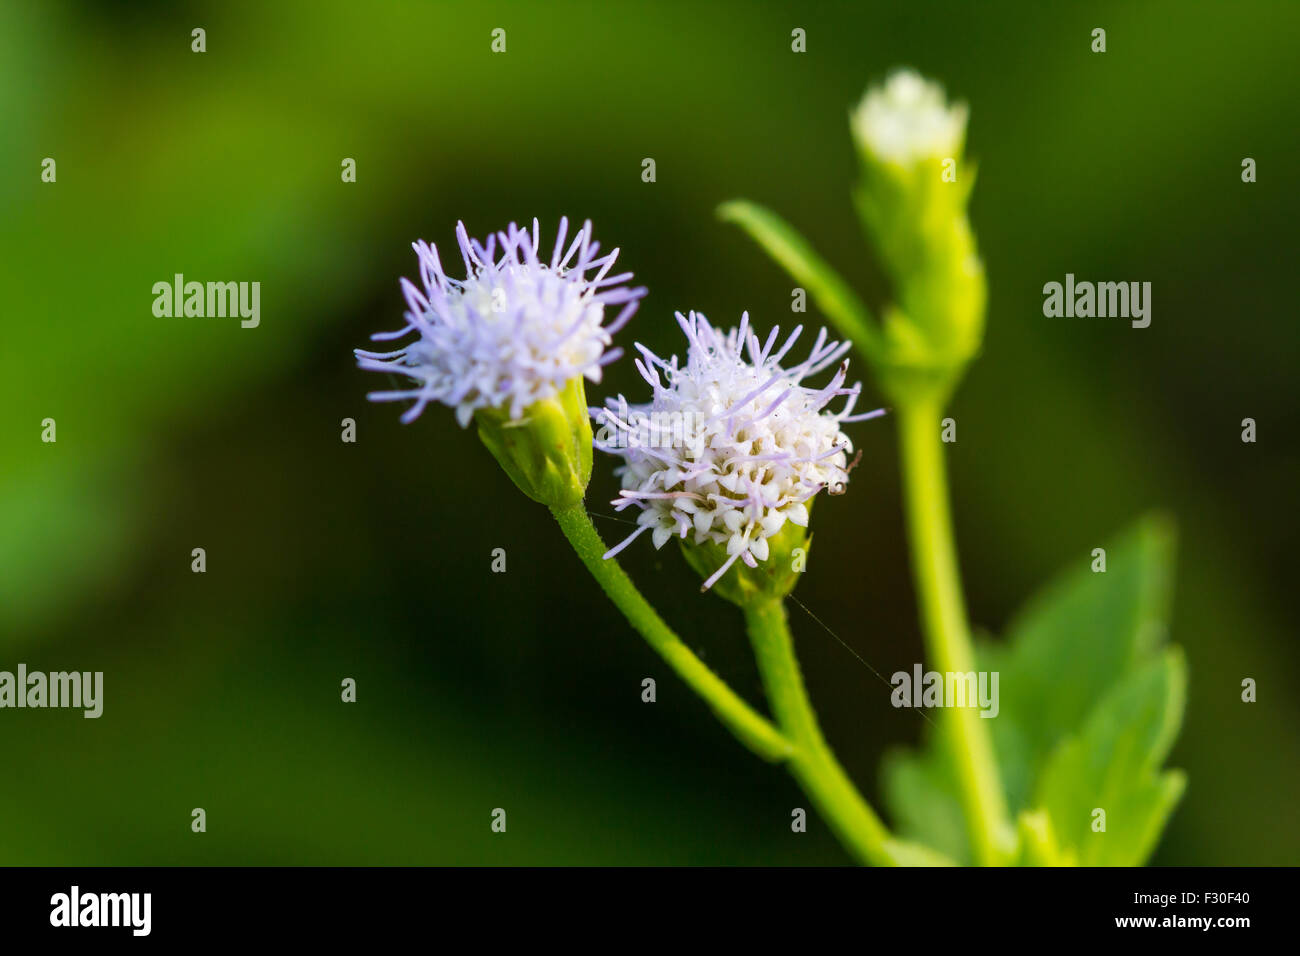 Beautiful Flower Siam weed or Adenostemma viscosum Stock Photo